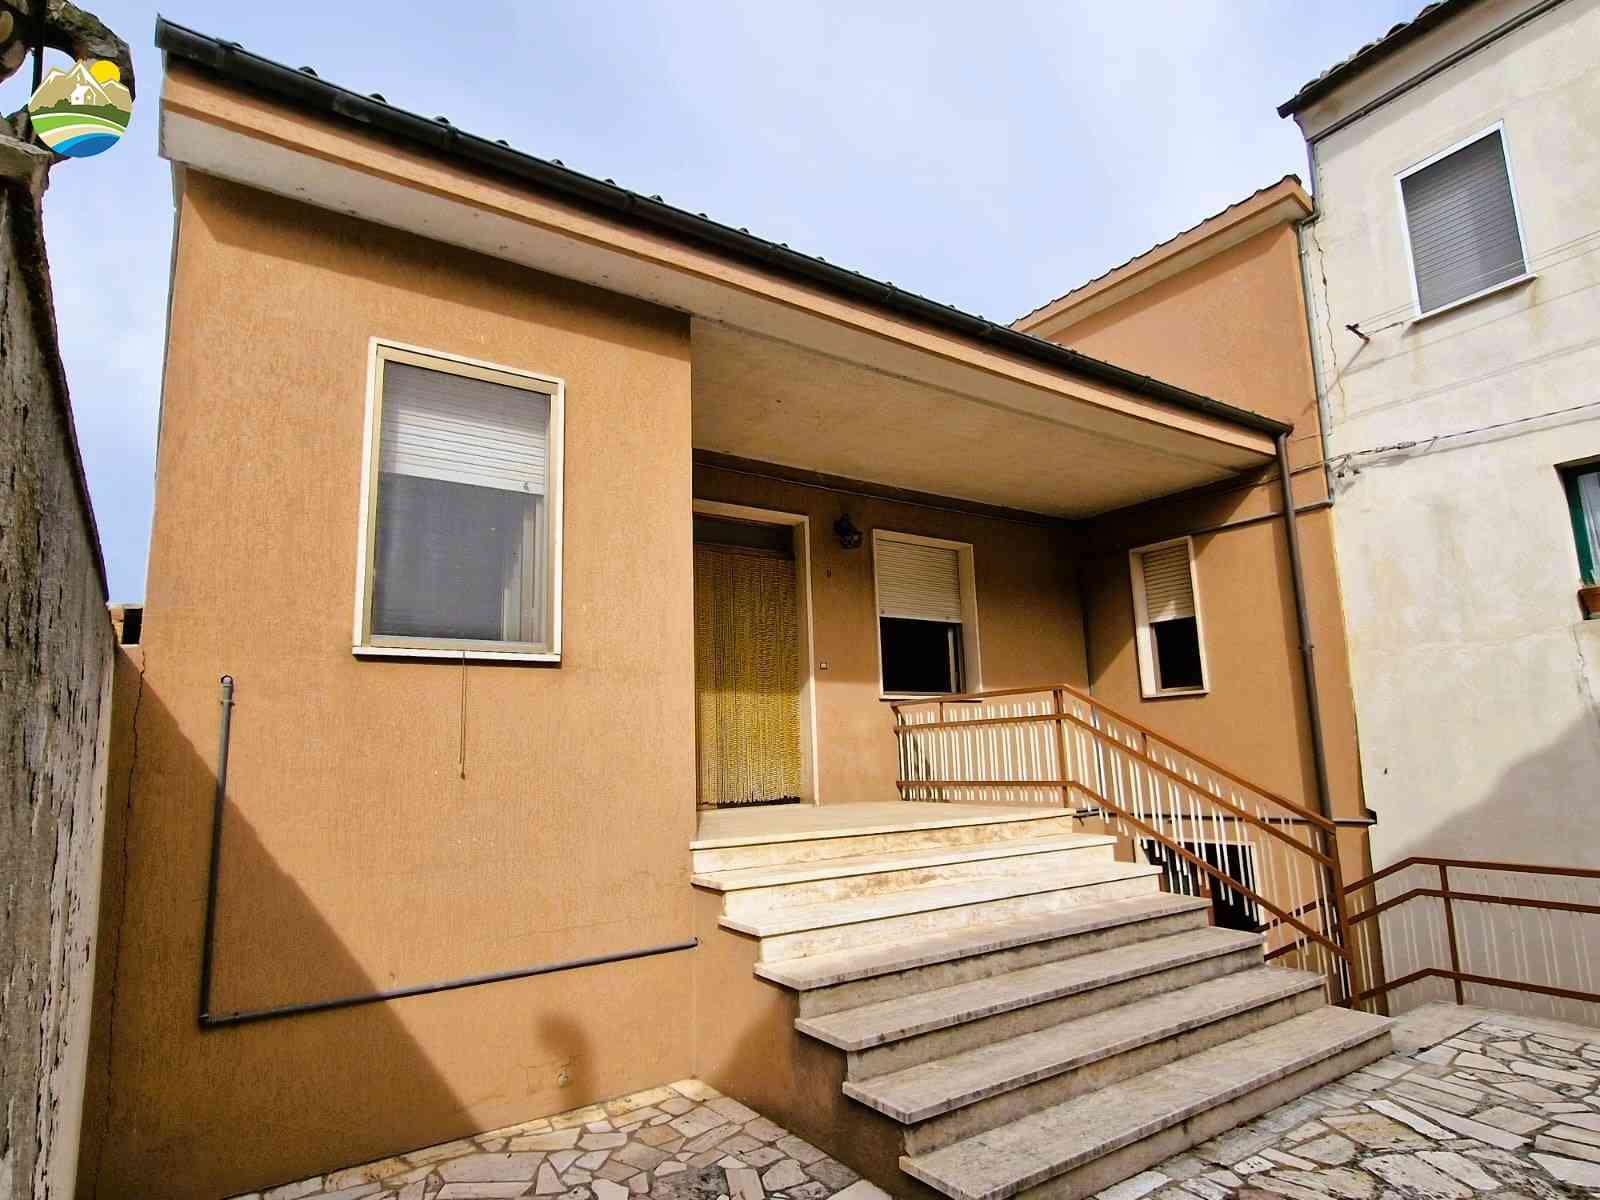 Townhouse Townhouse for sale Cellino Attanasio (TE), Casa Panoramica - Cellino Attanasio - EUR 95.065 640